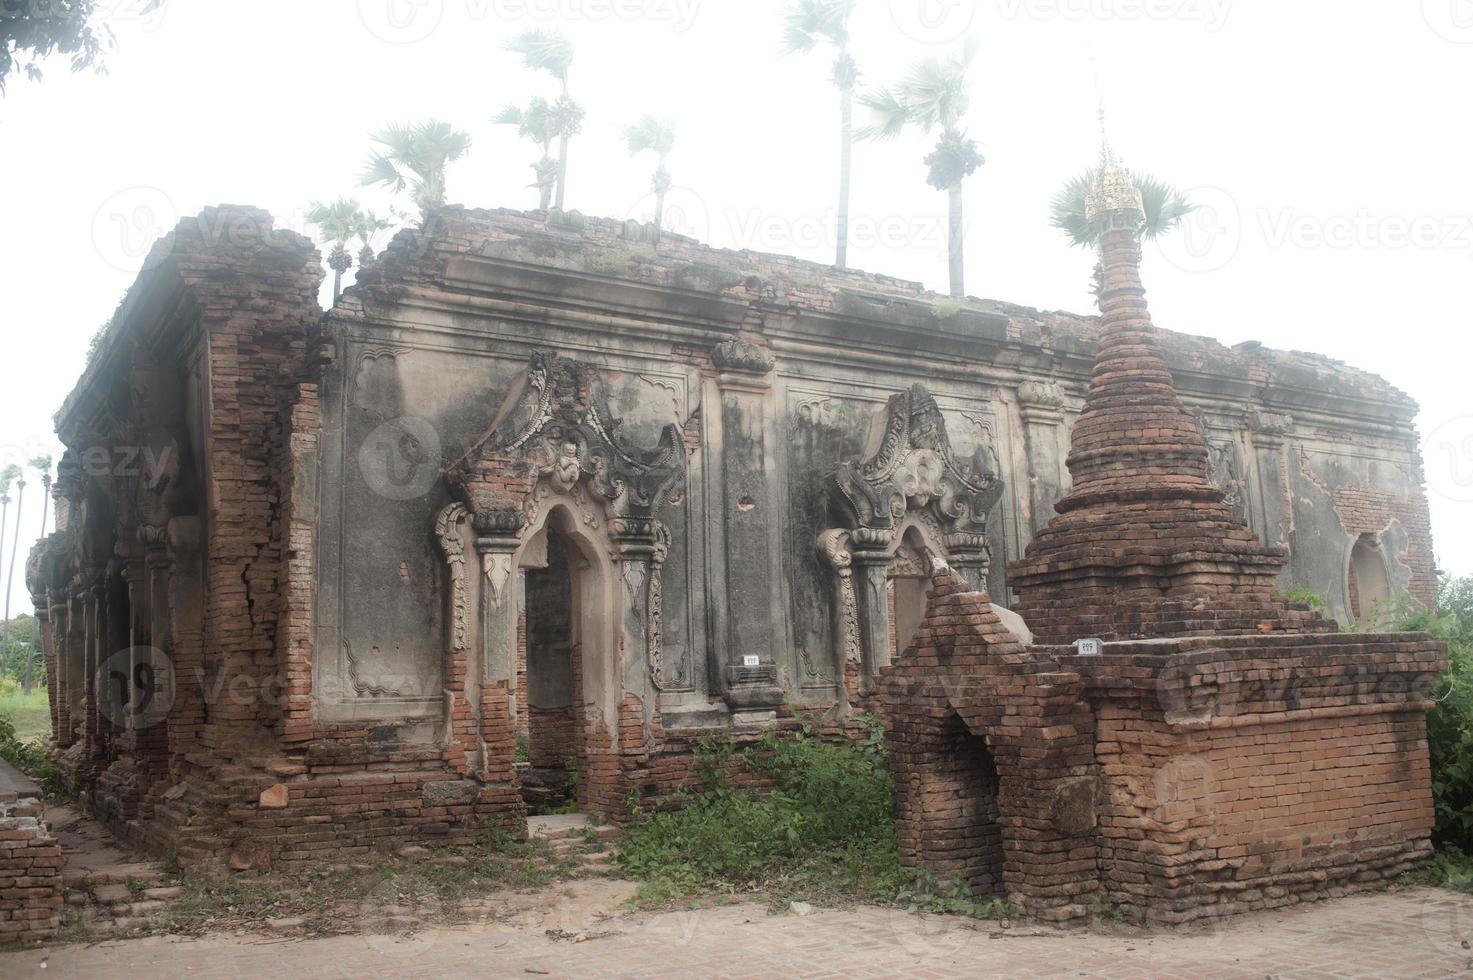 complexo de pagode yadana hsemee em myanmar. foto